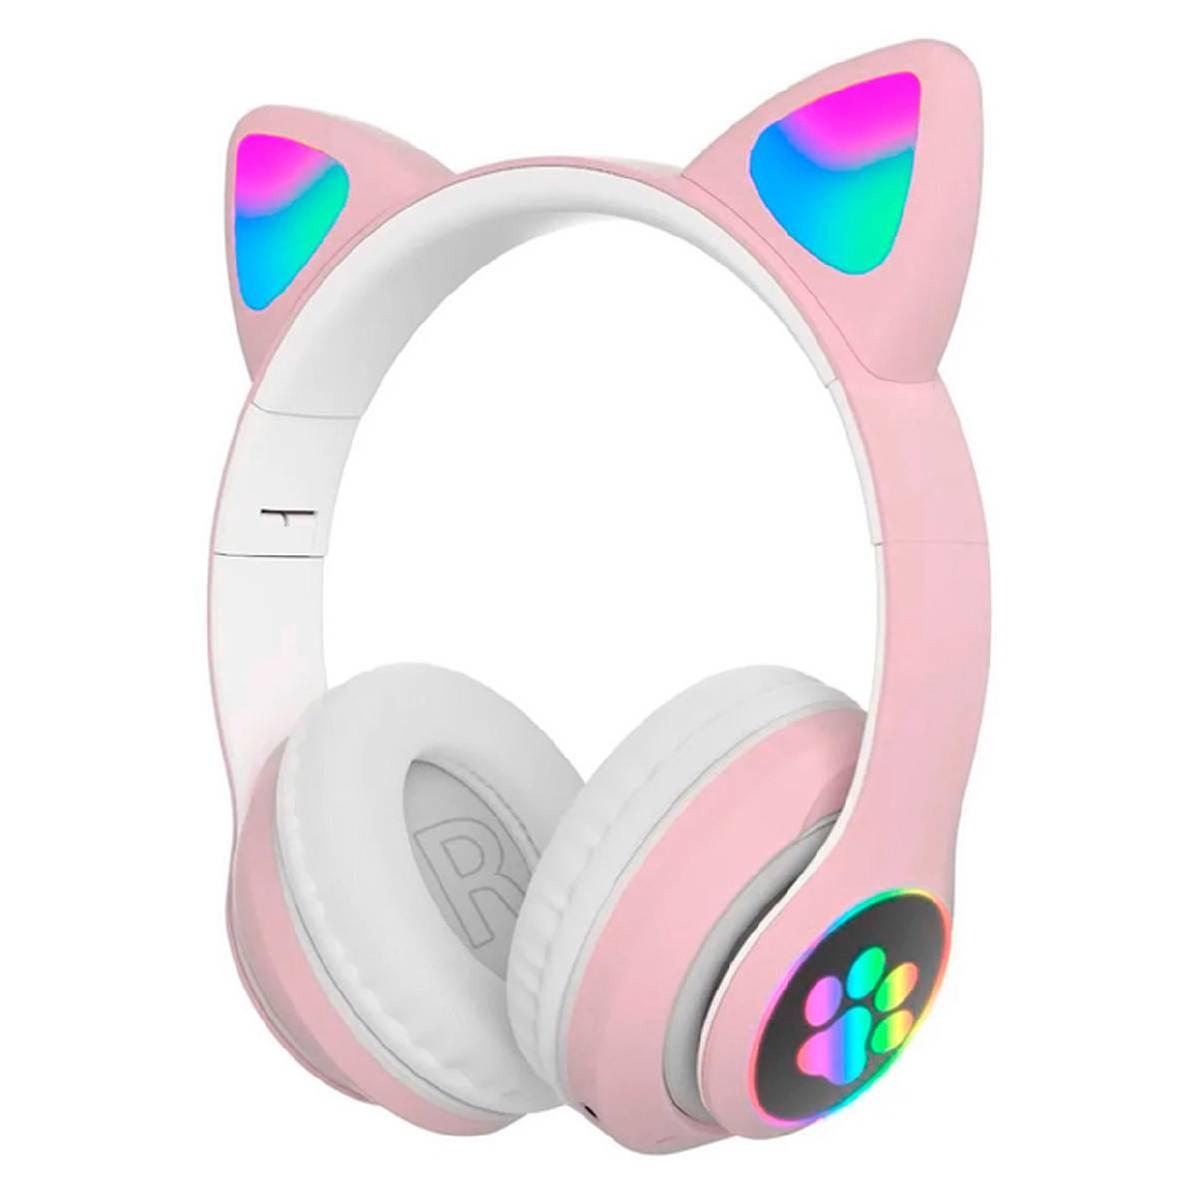 Auriculares orejas de gato bluetooth rosa | Cascos | Toys"R"Us España